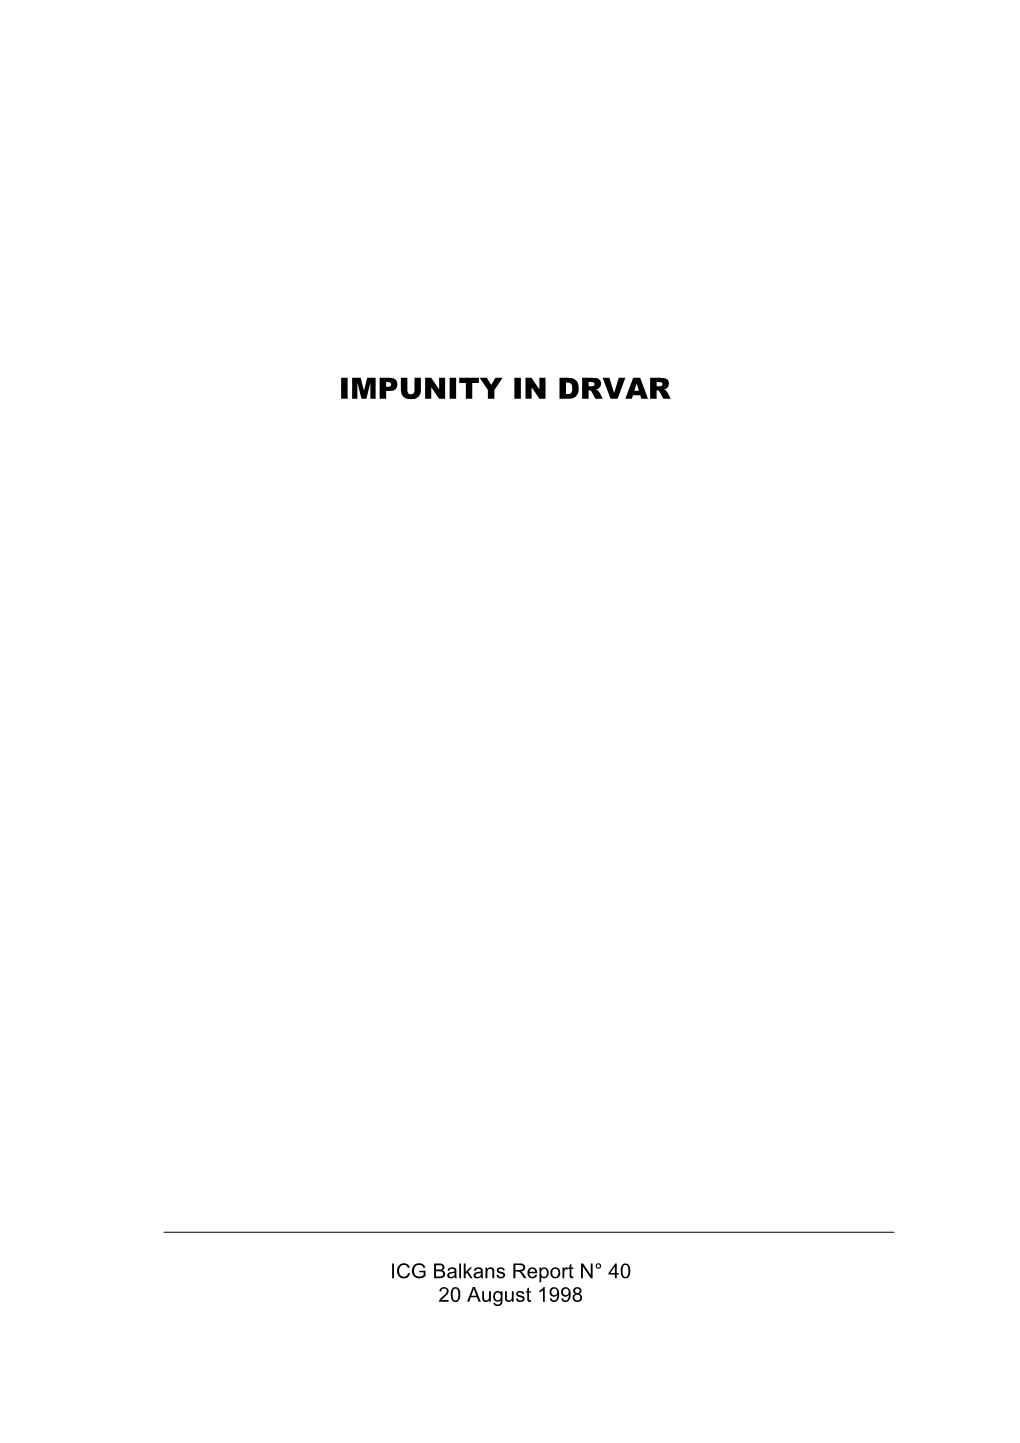 Impunity in Drvar